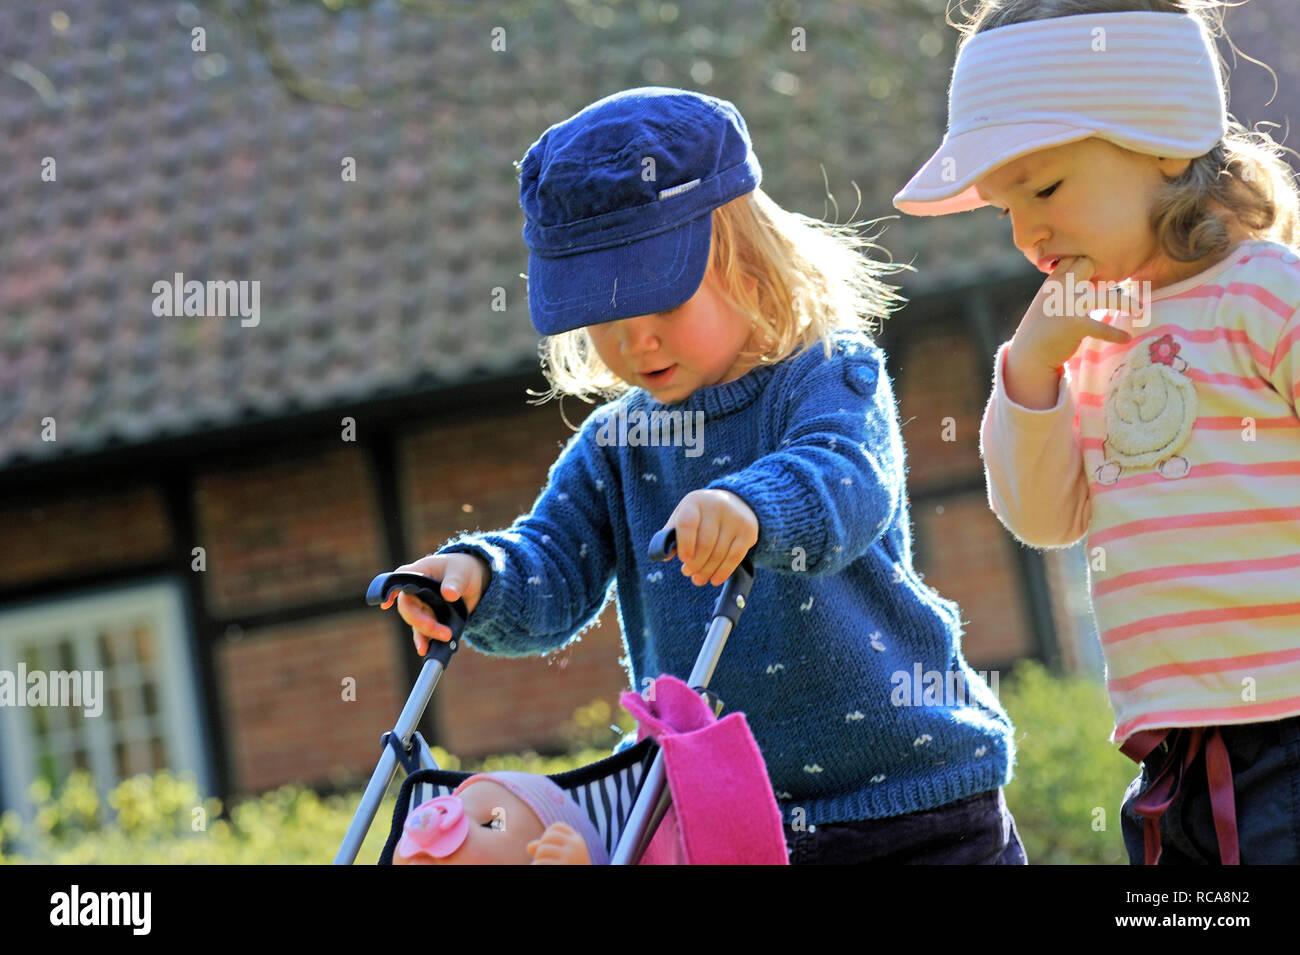 Kinder spielen mit Kinderwagen | Bambini che giocano con un buggy Foto Stock